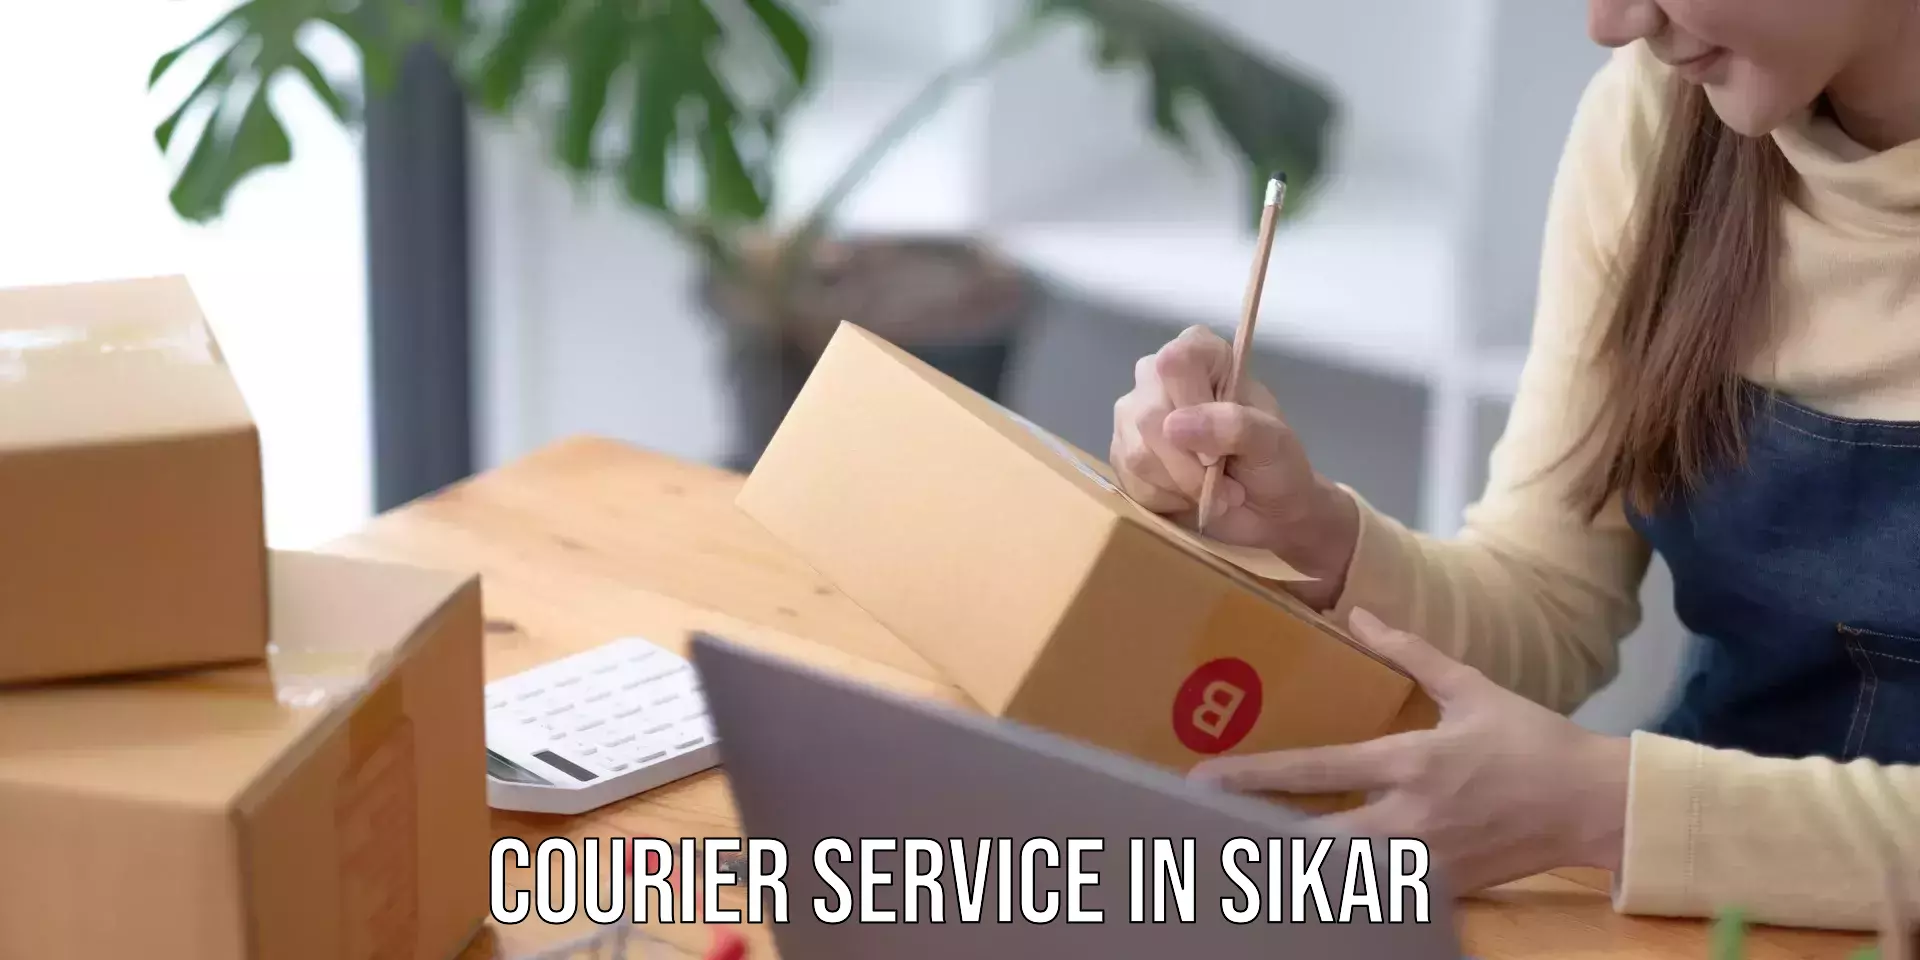 Parcel delivery in Sikar